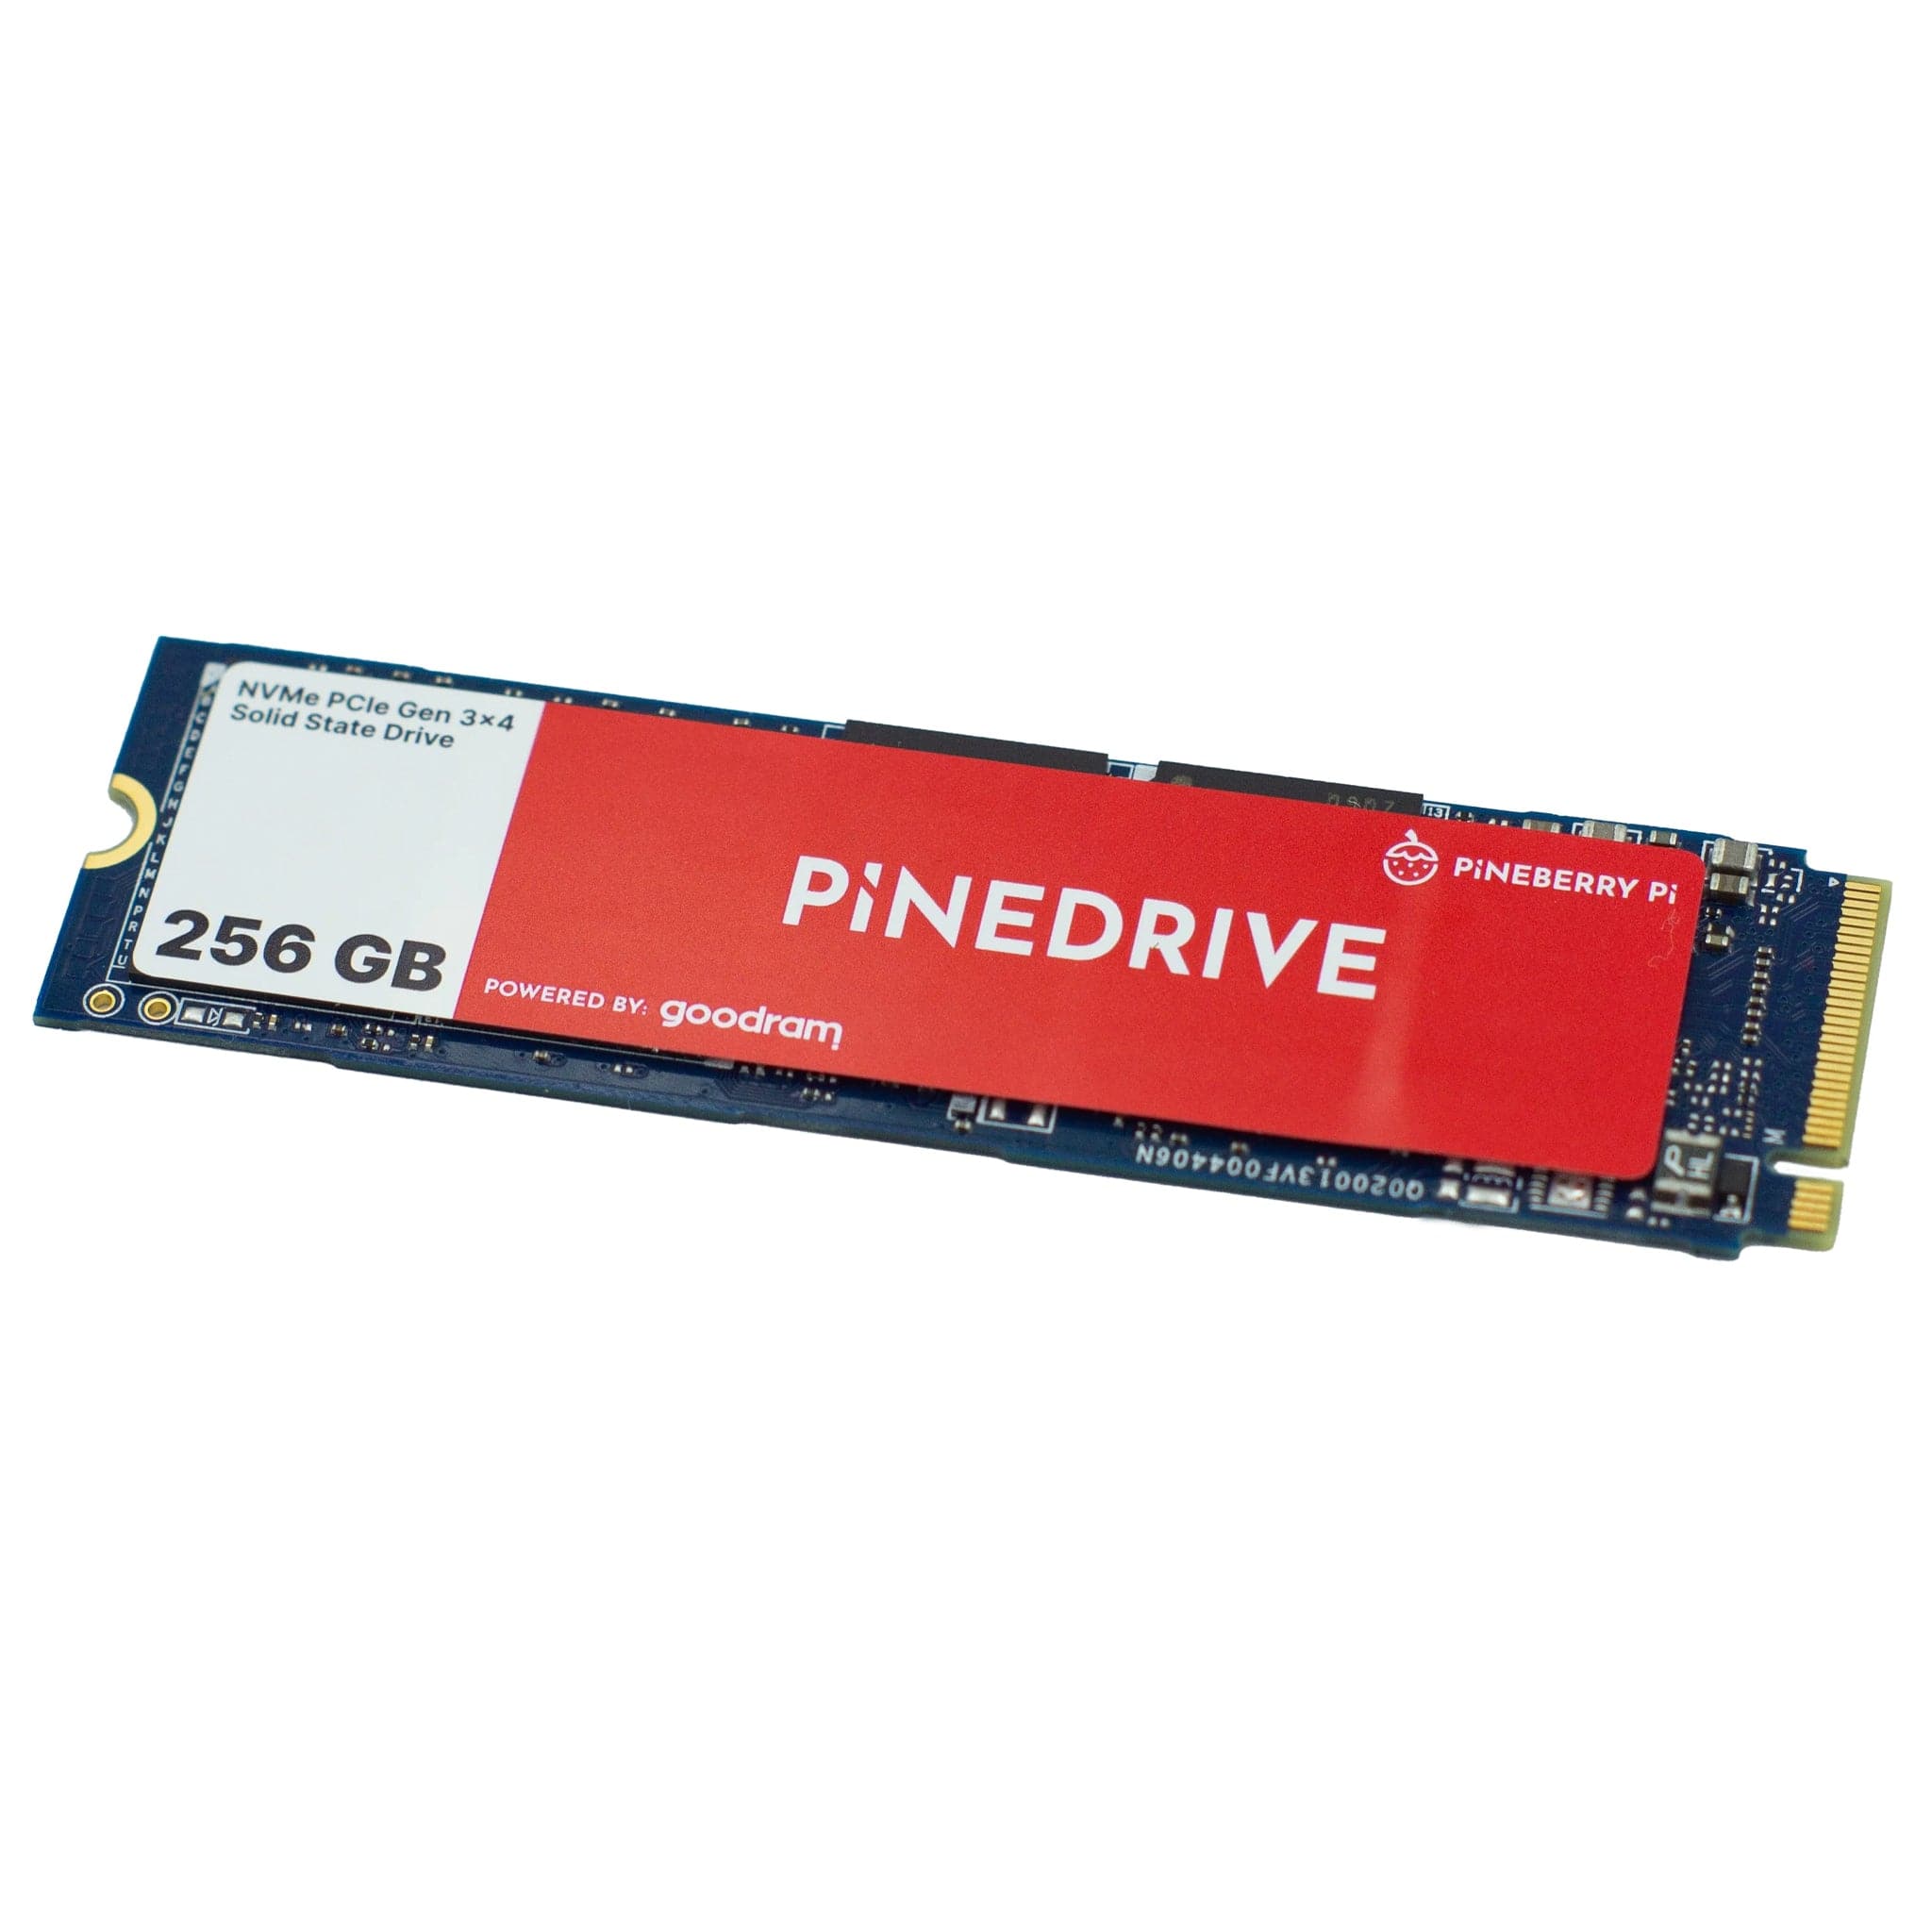 Pinedrive 256GB NVMe SSD (2280) - The Pi Hut